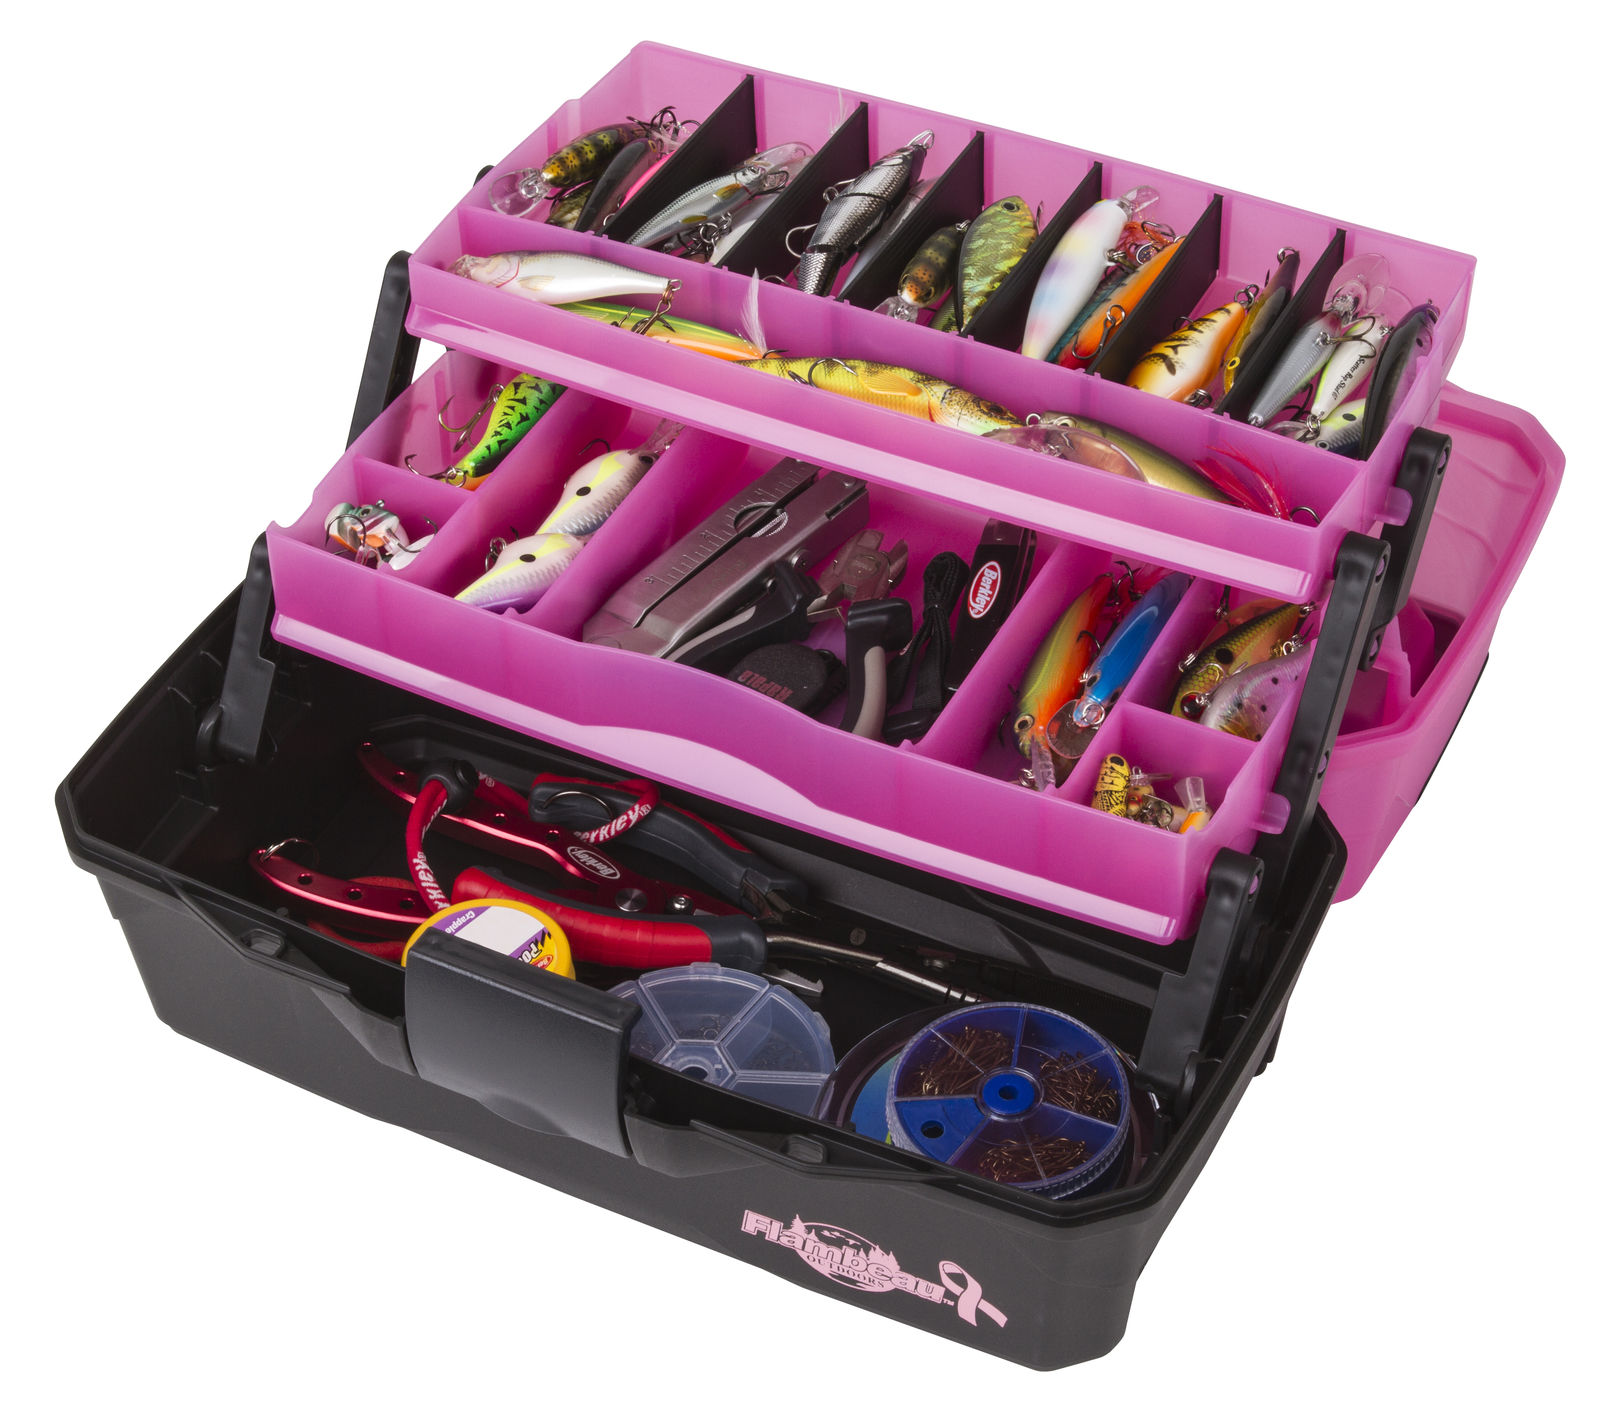 One Tray Pink Ribbon Classic Tackle Box